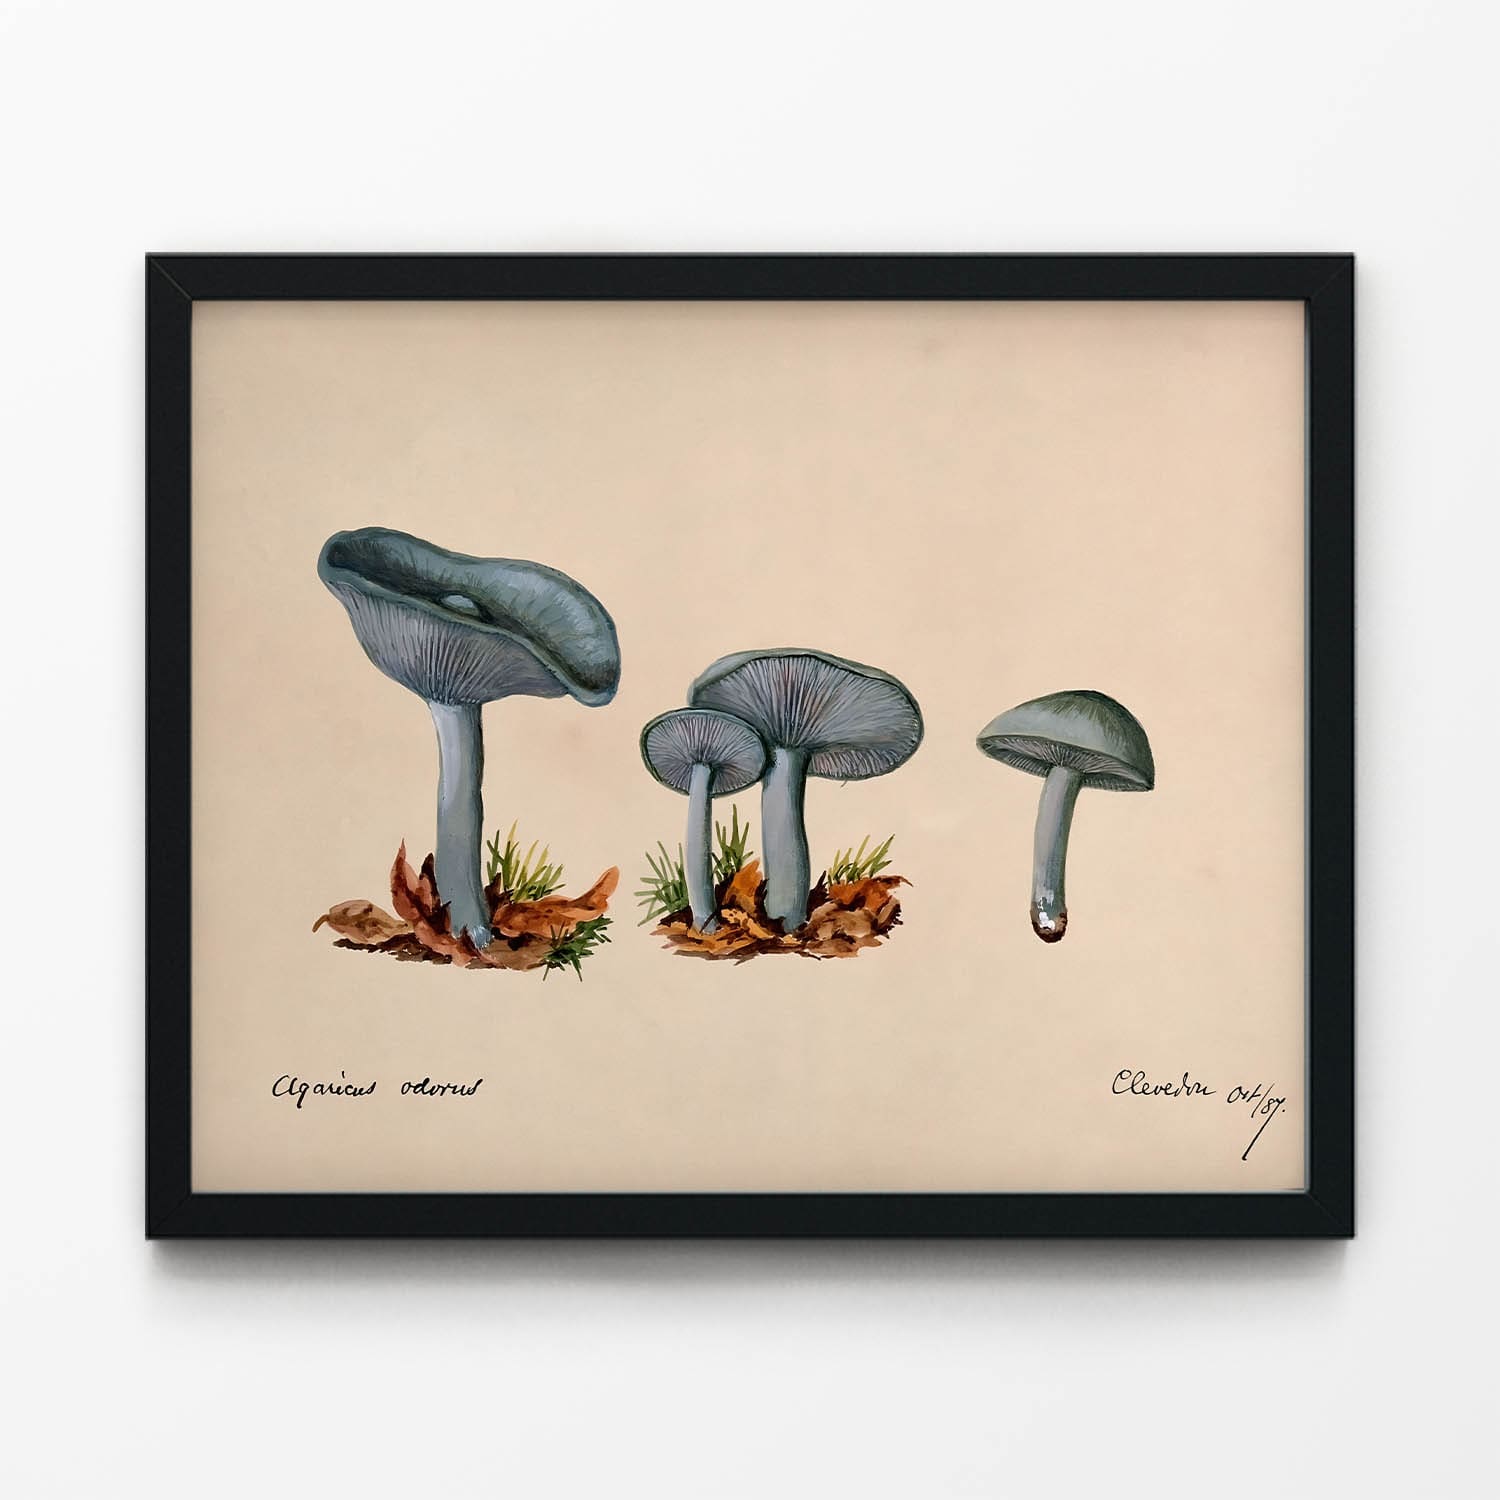 Little Blue Mushrooms Art Print in Black Picture Frame